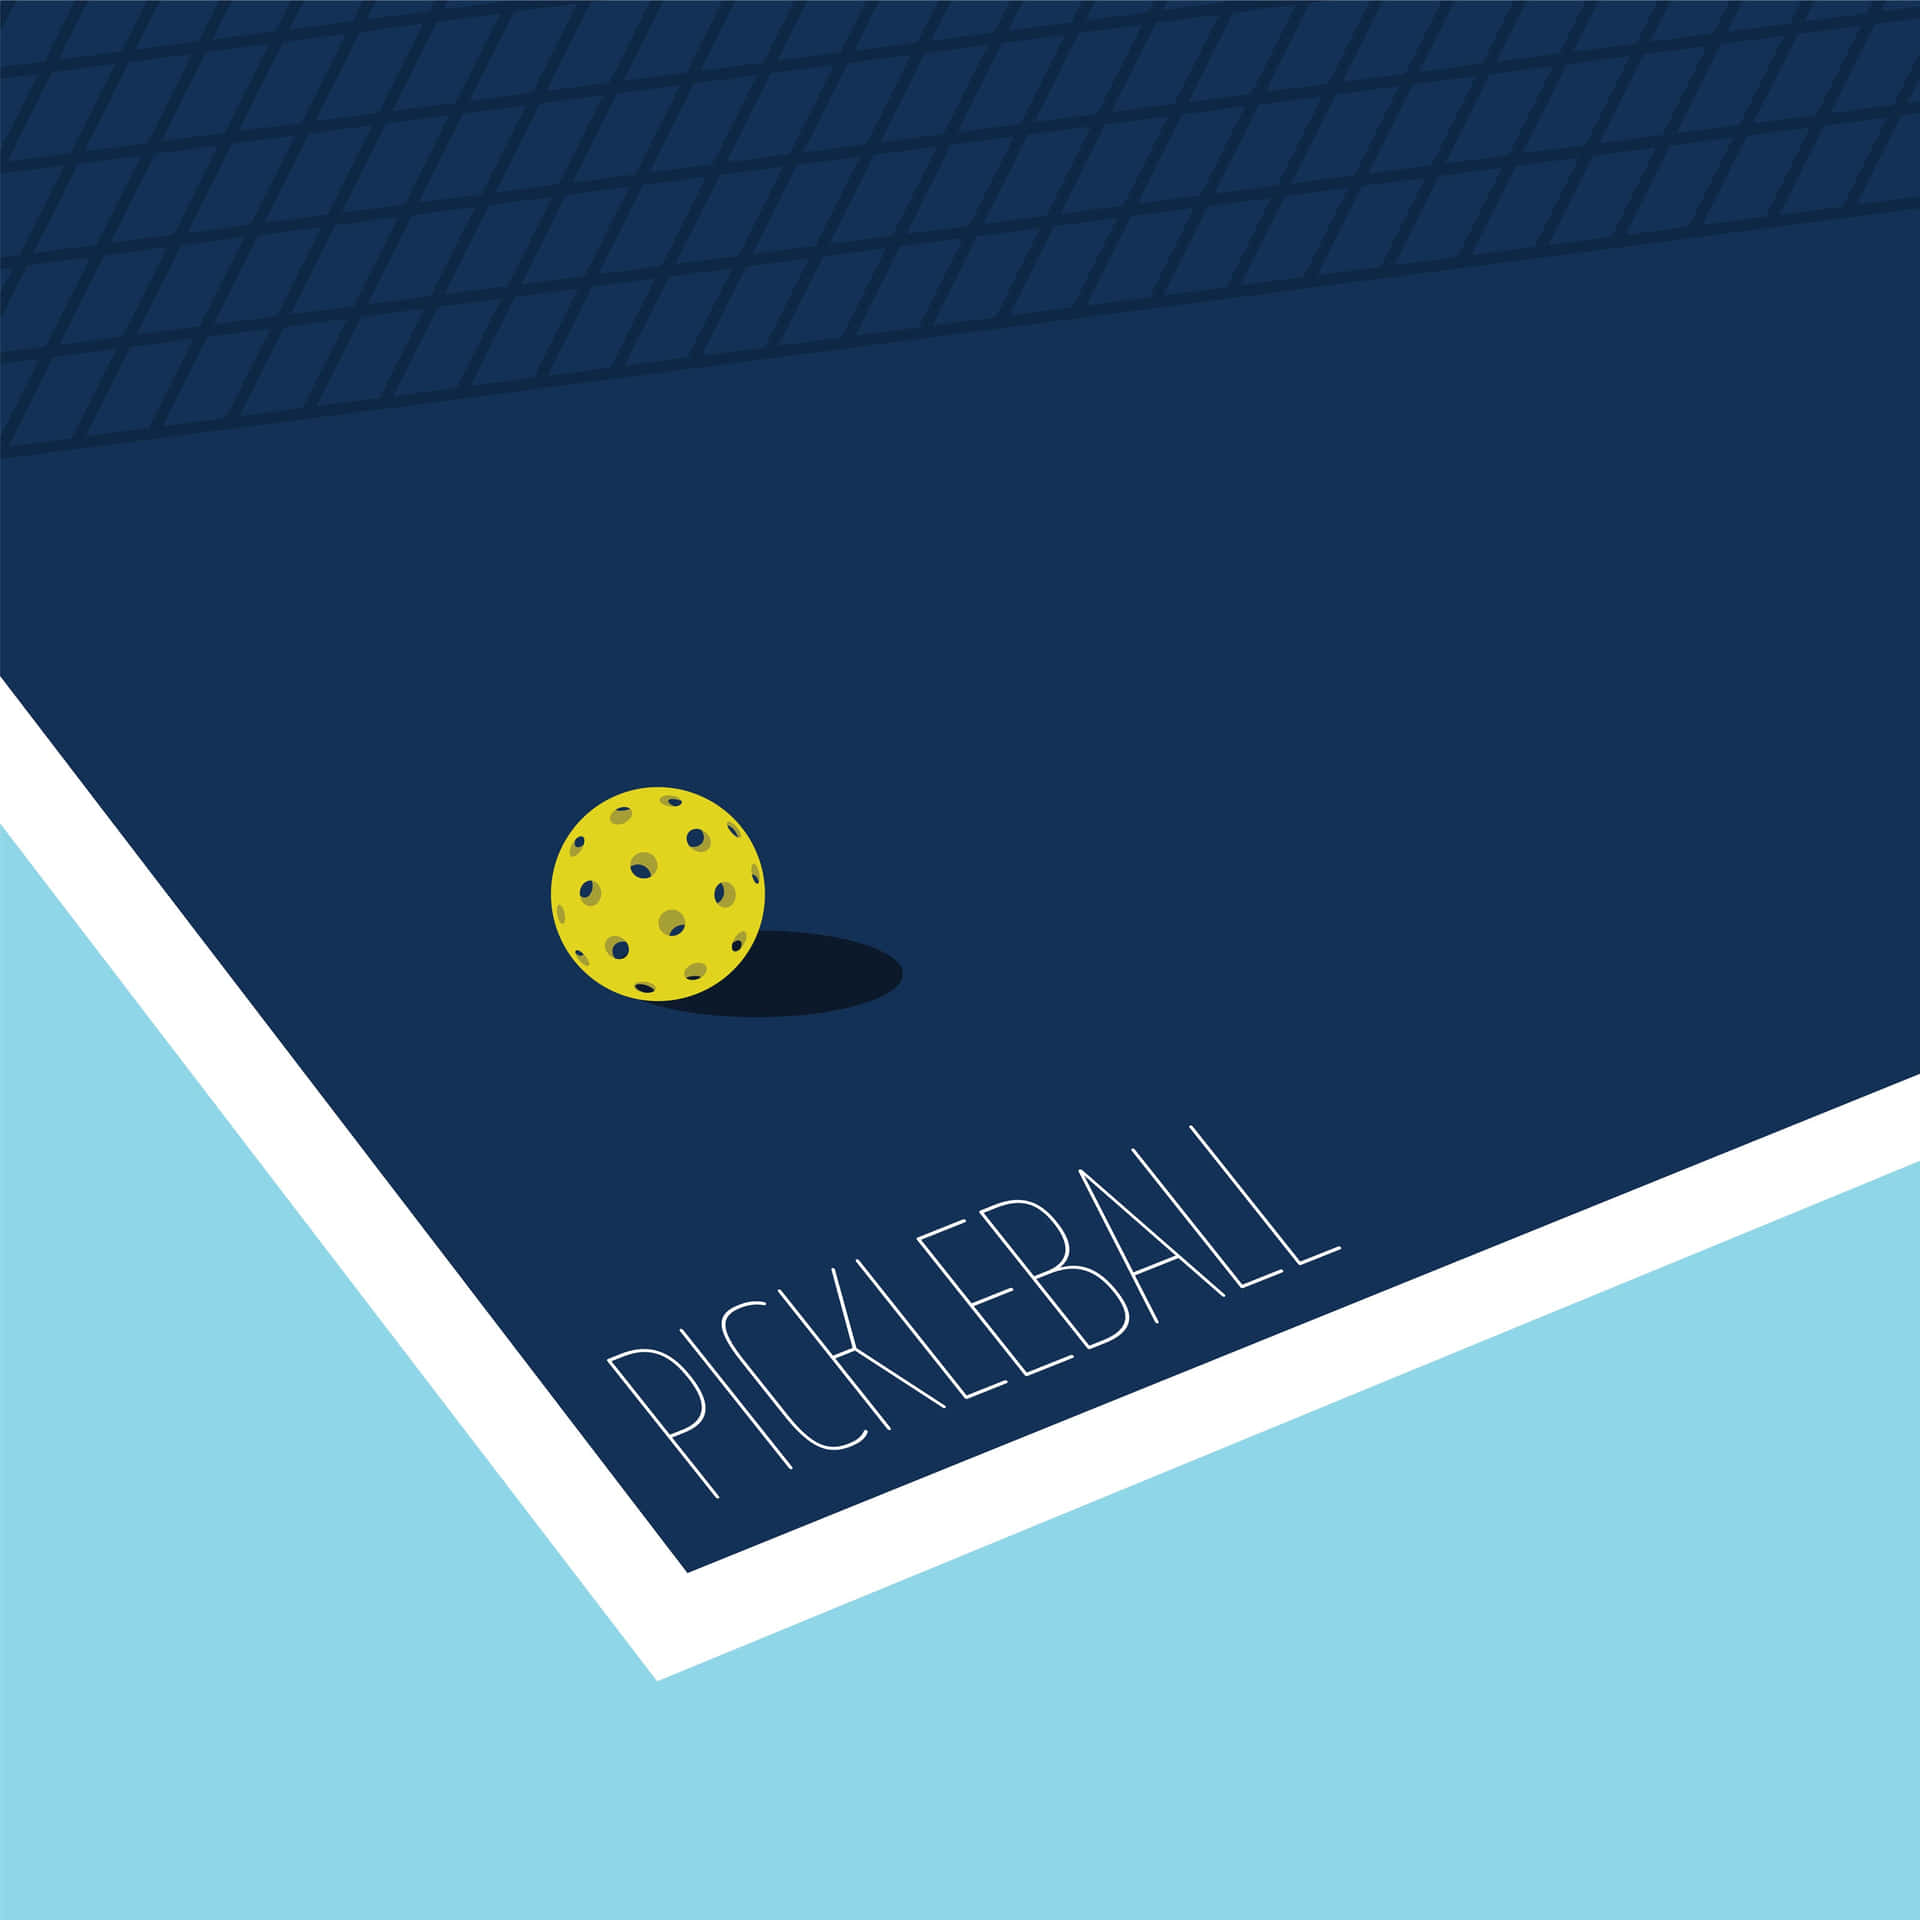 Pickleball Courtand Ball Illustration Wallpaper